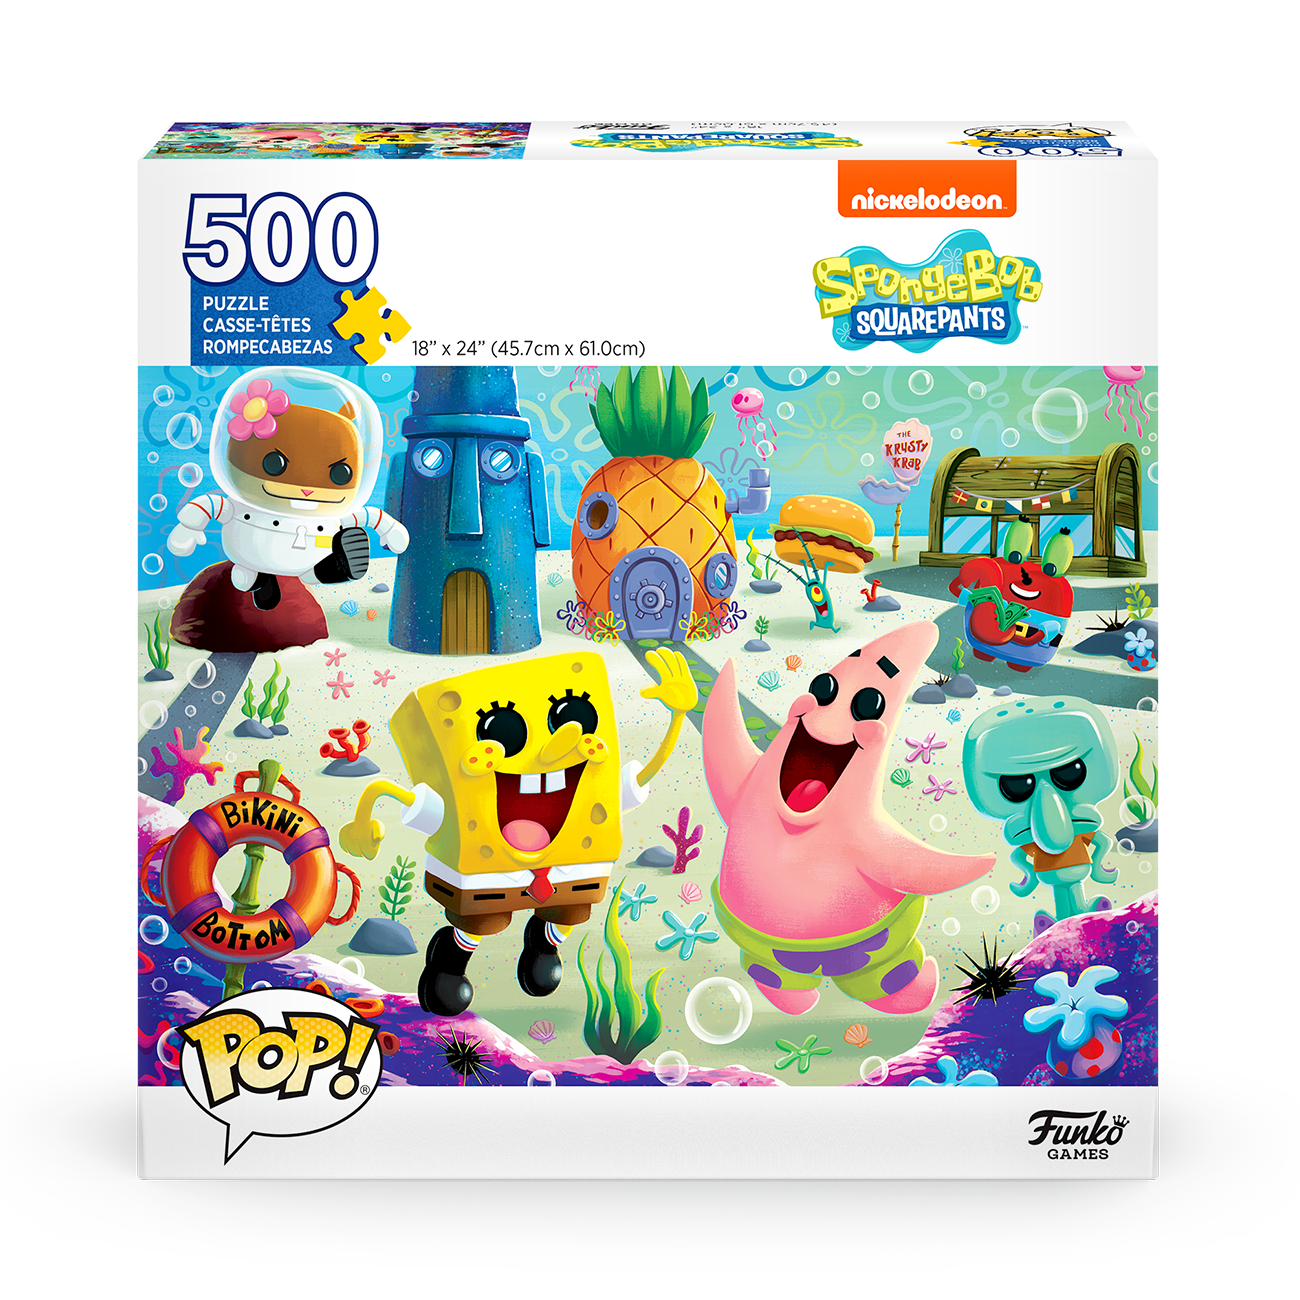 FUNKO GAMES Pop! Puzzle - Spongebob Squarepants